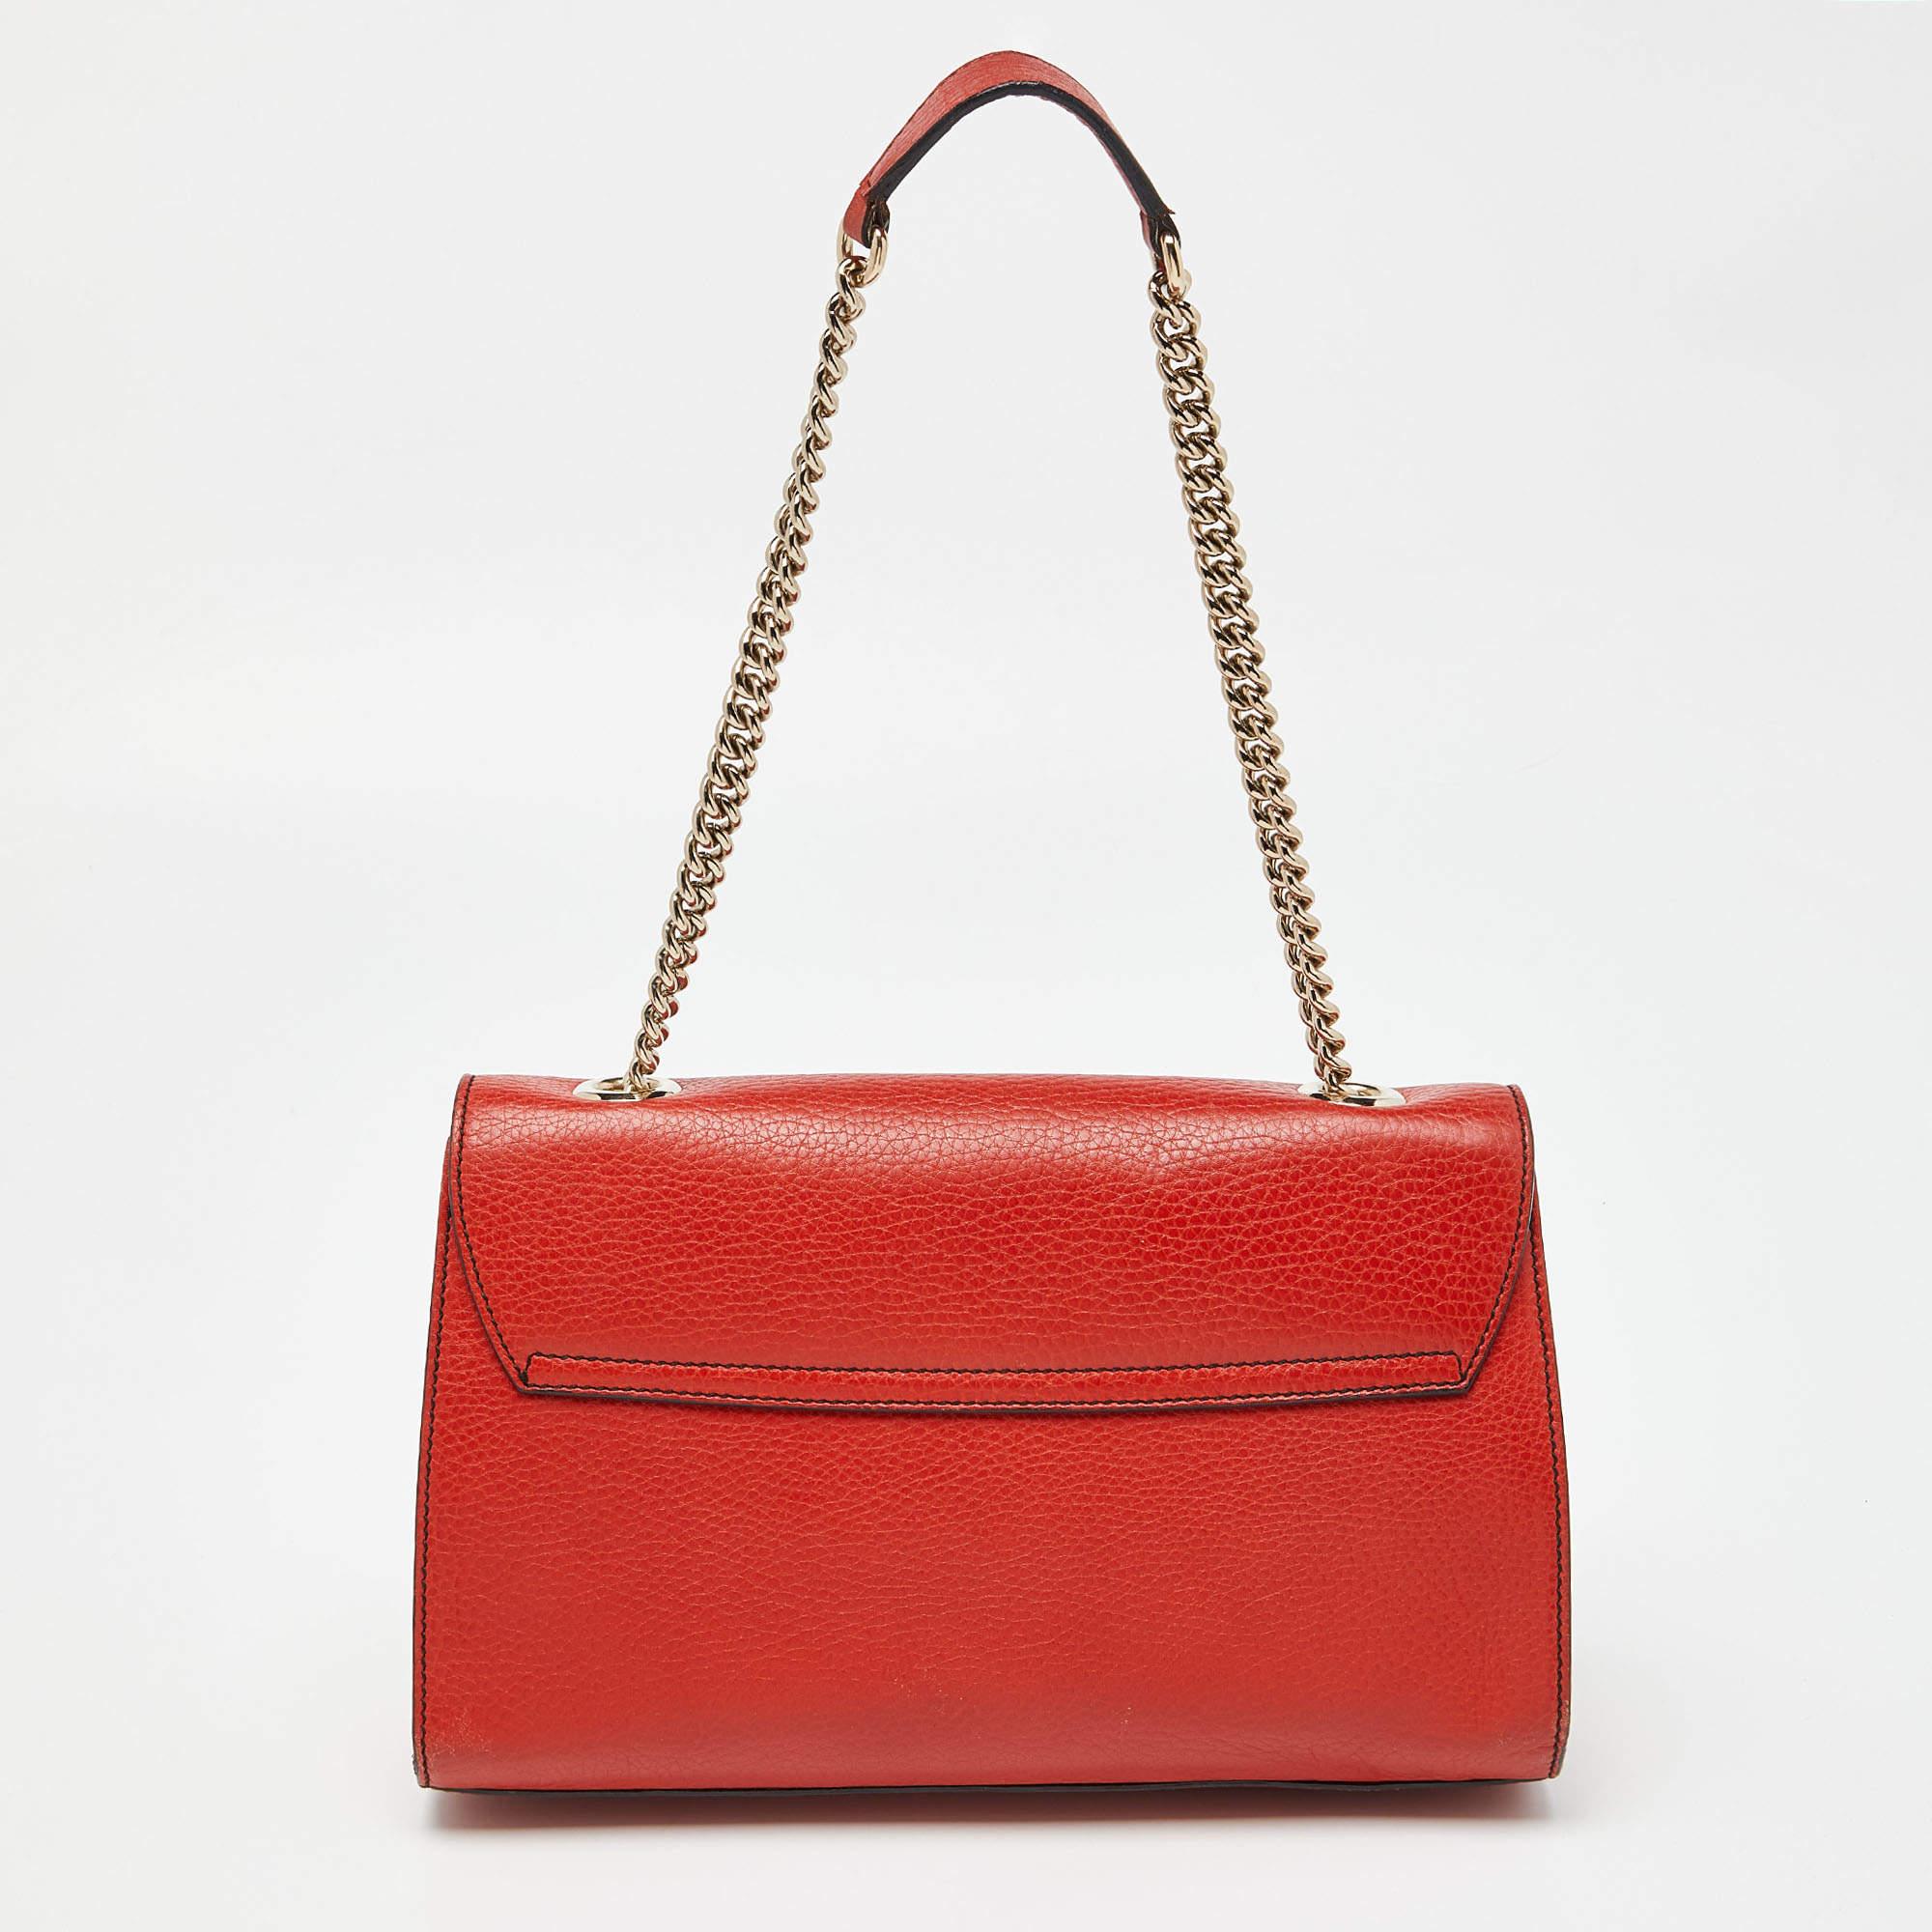 Gucci Coral Red Leather Medium Emily Shoulder Bag In Fair Condition For Sale In Dubai, Al Qouz 2